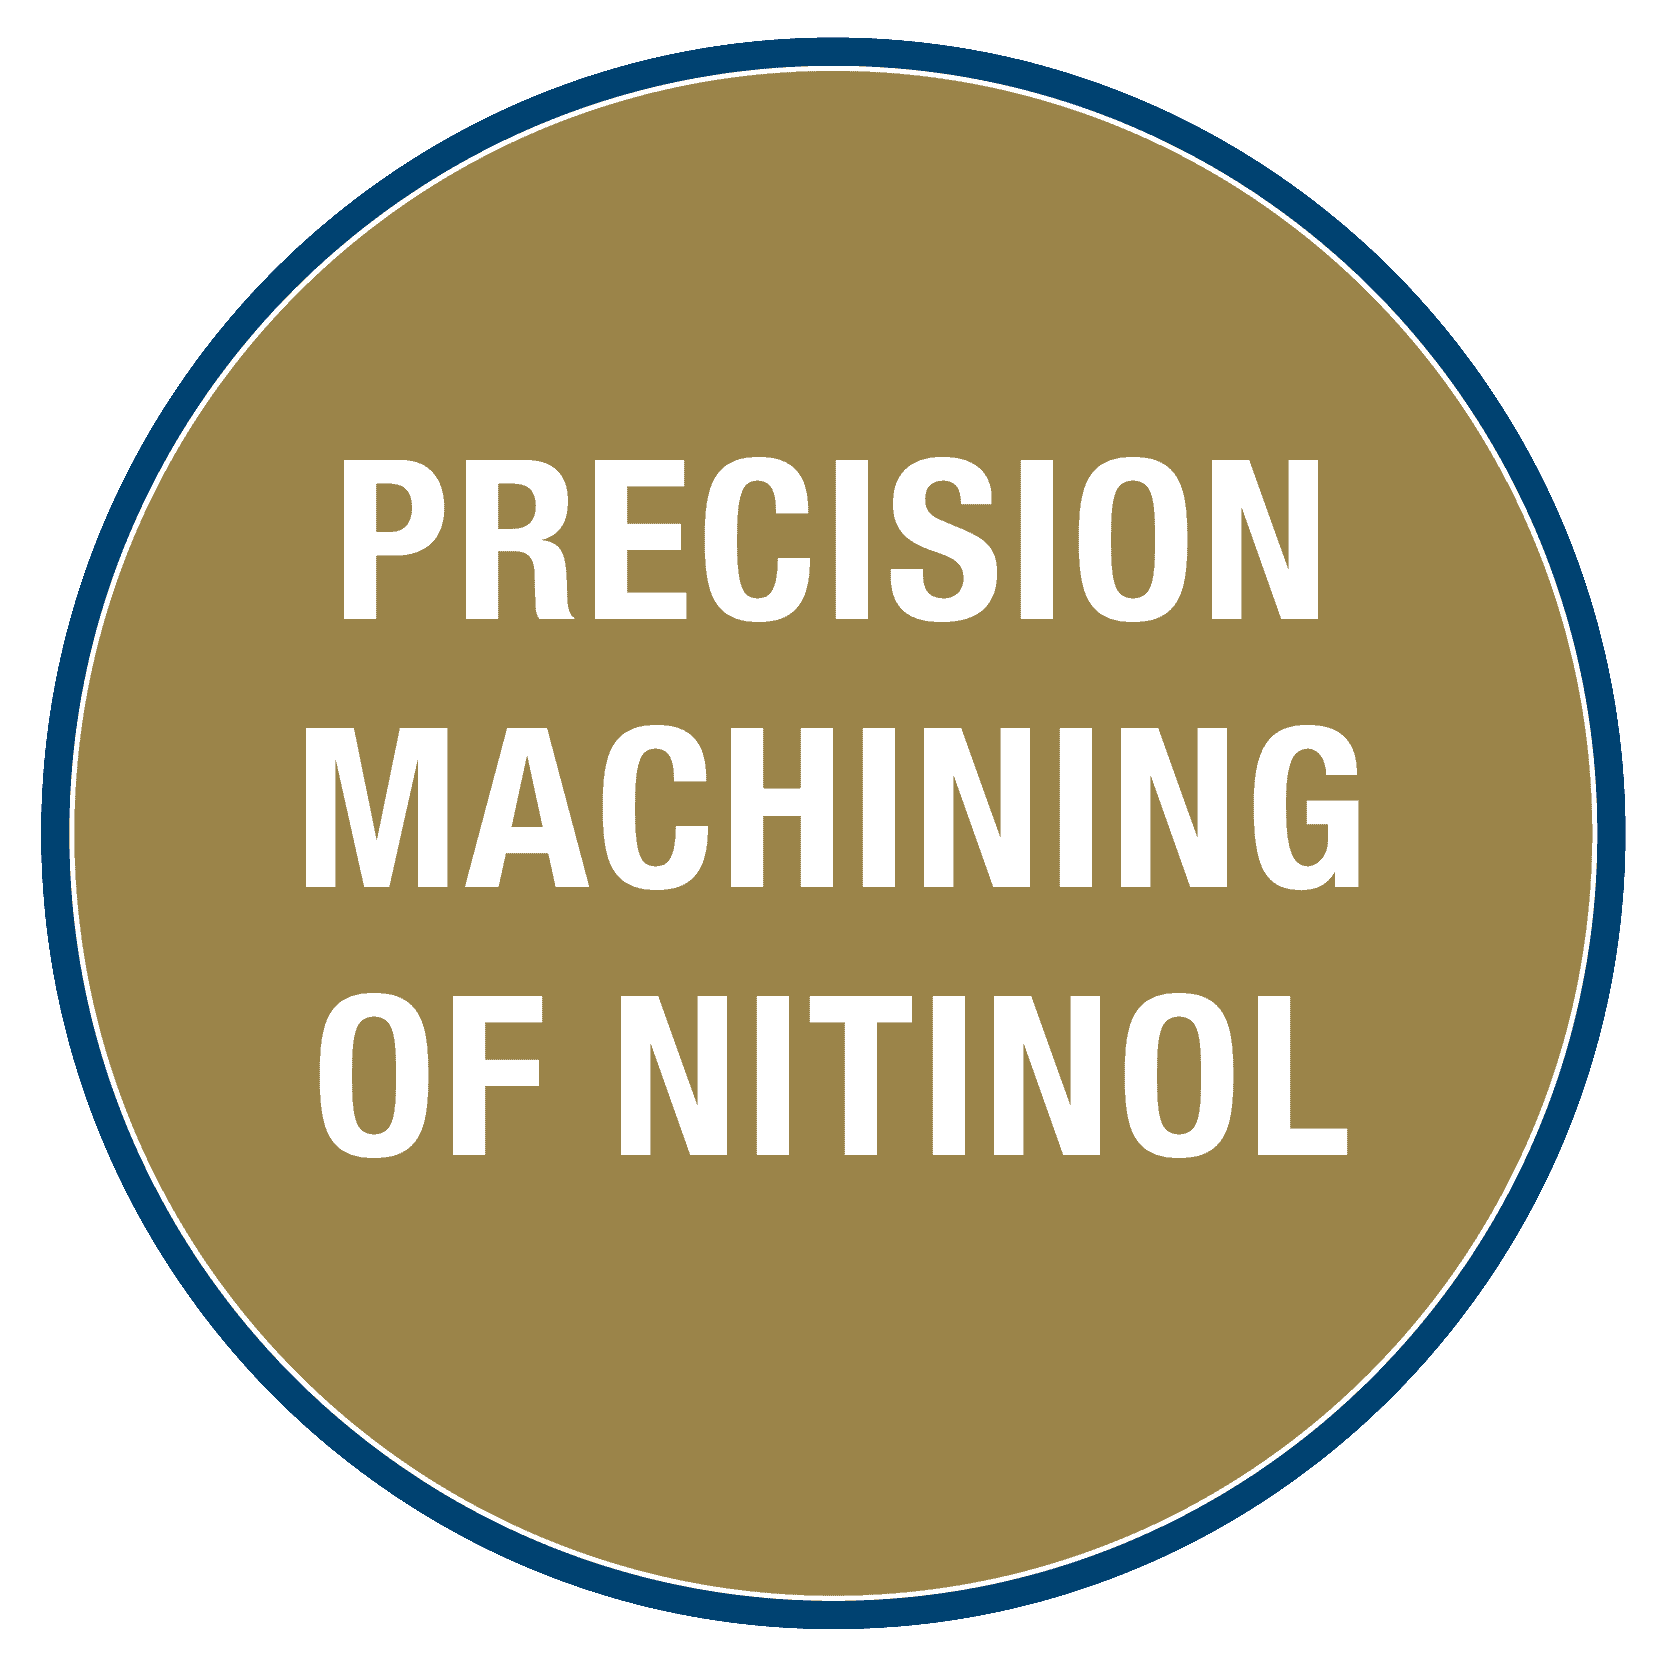 Precision Machining of Nitinol